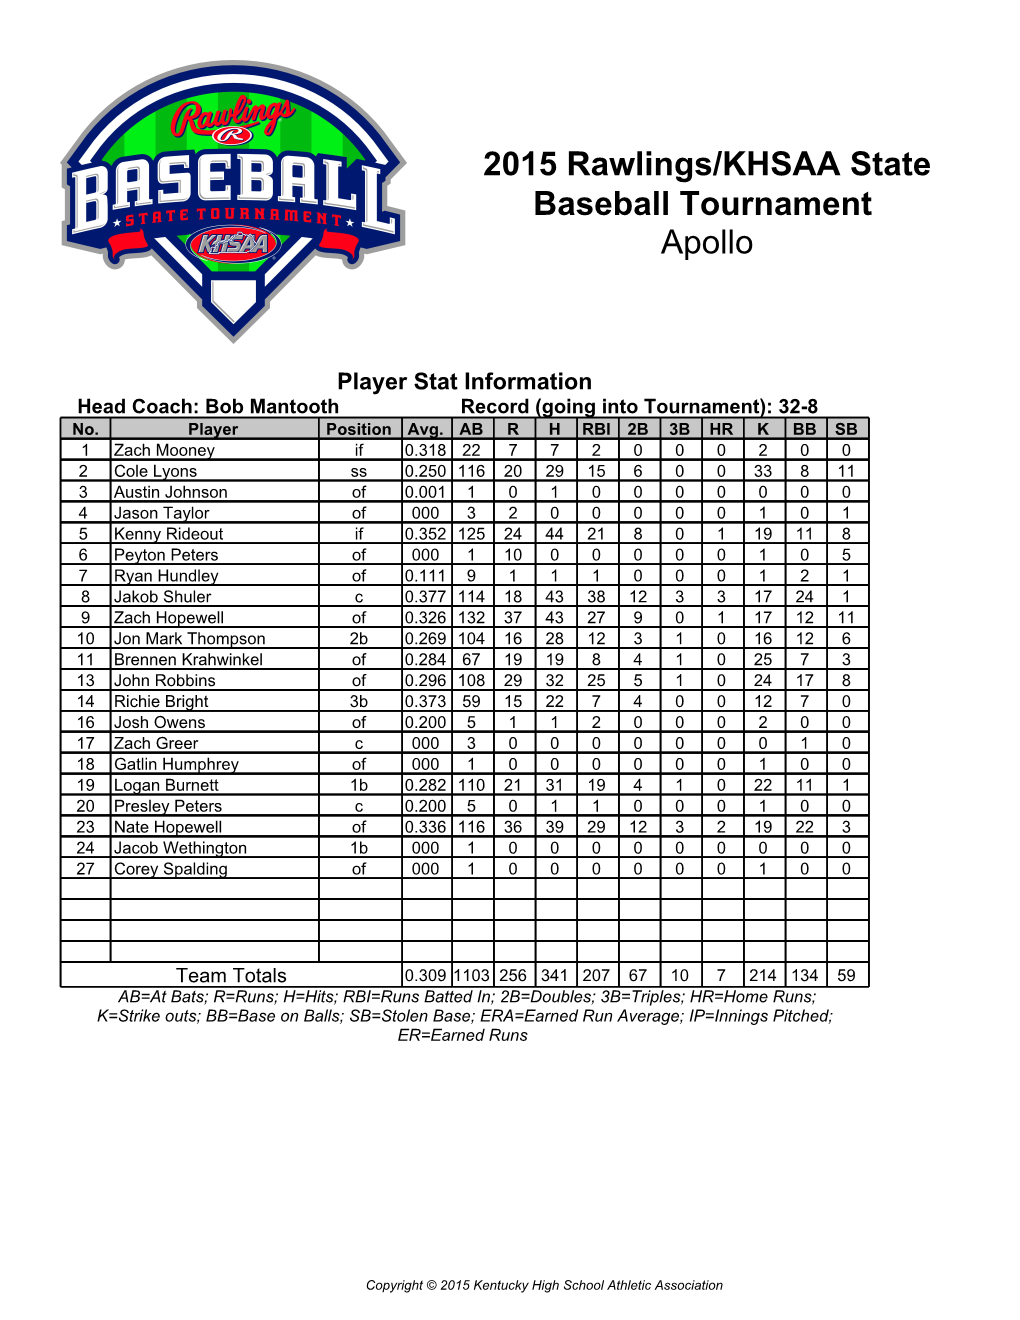 2015 Rawlings/KHSAA State Baseball Tournament Apollo